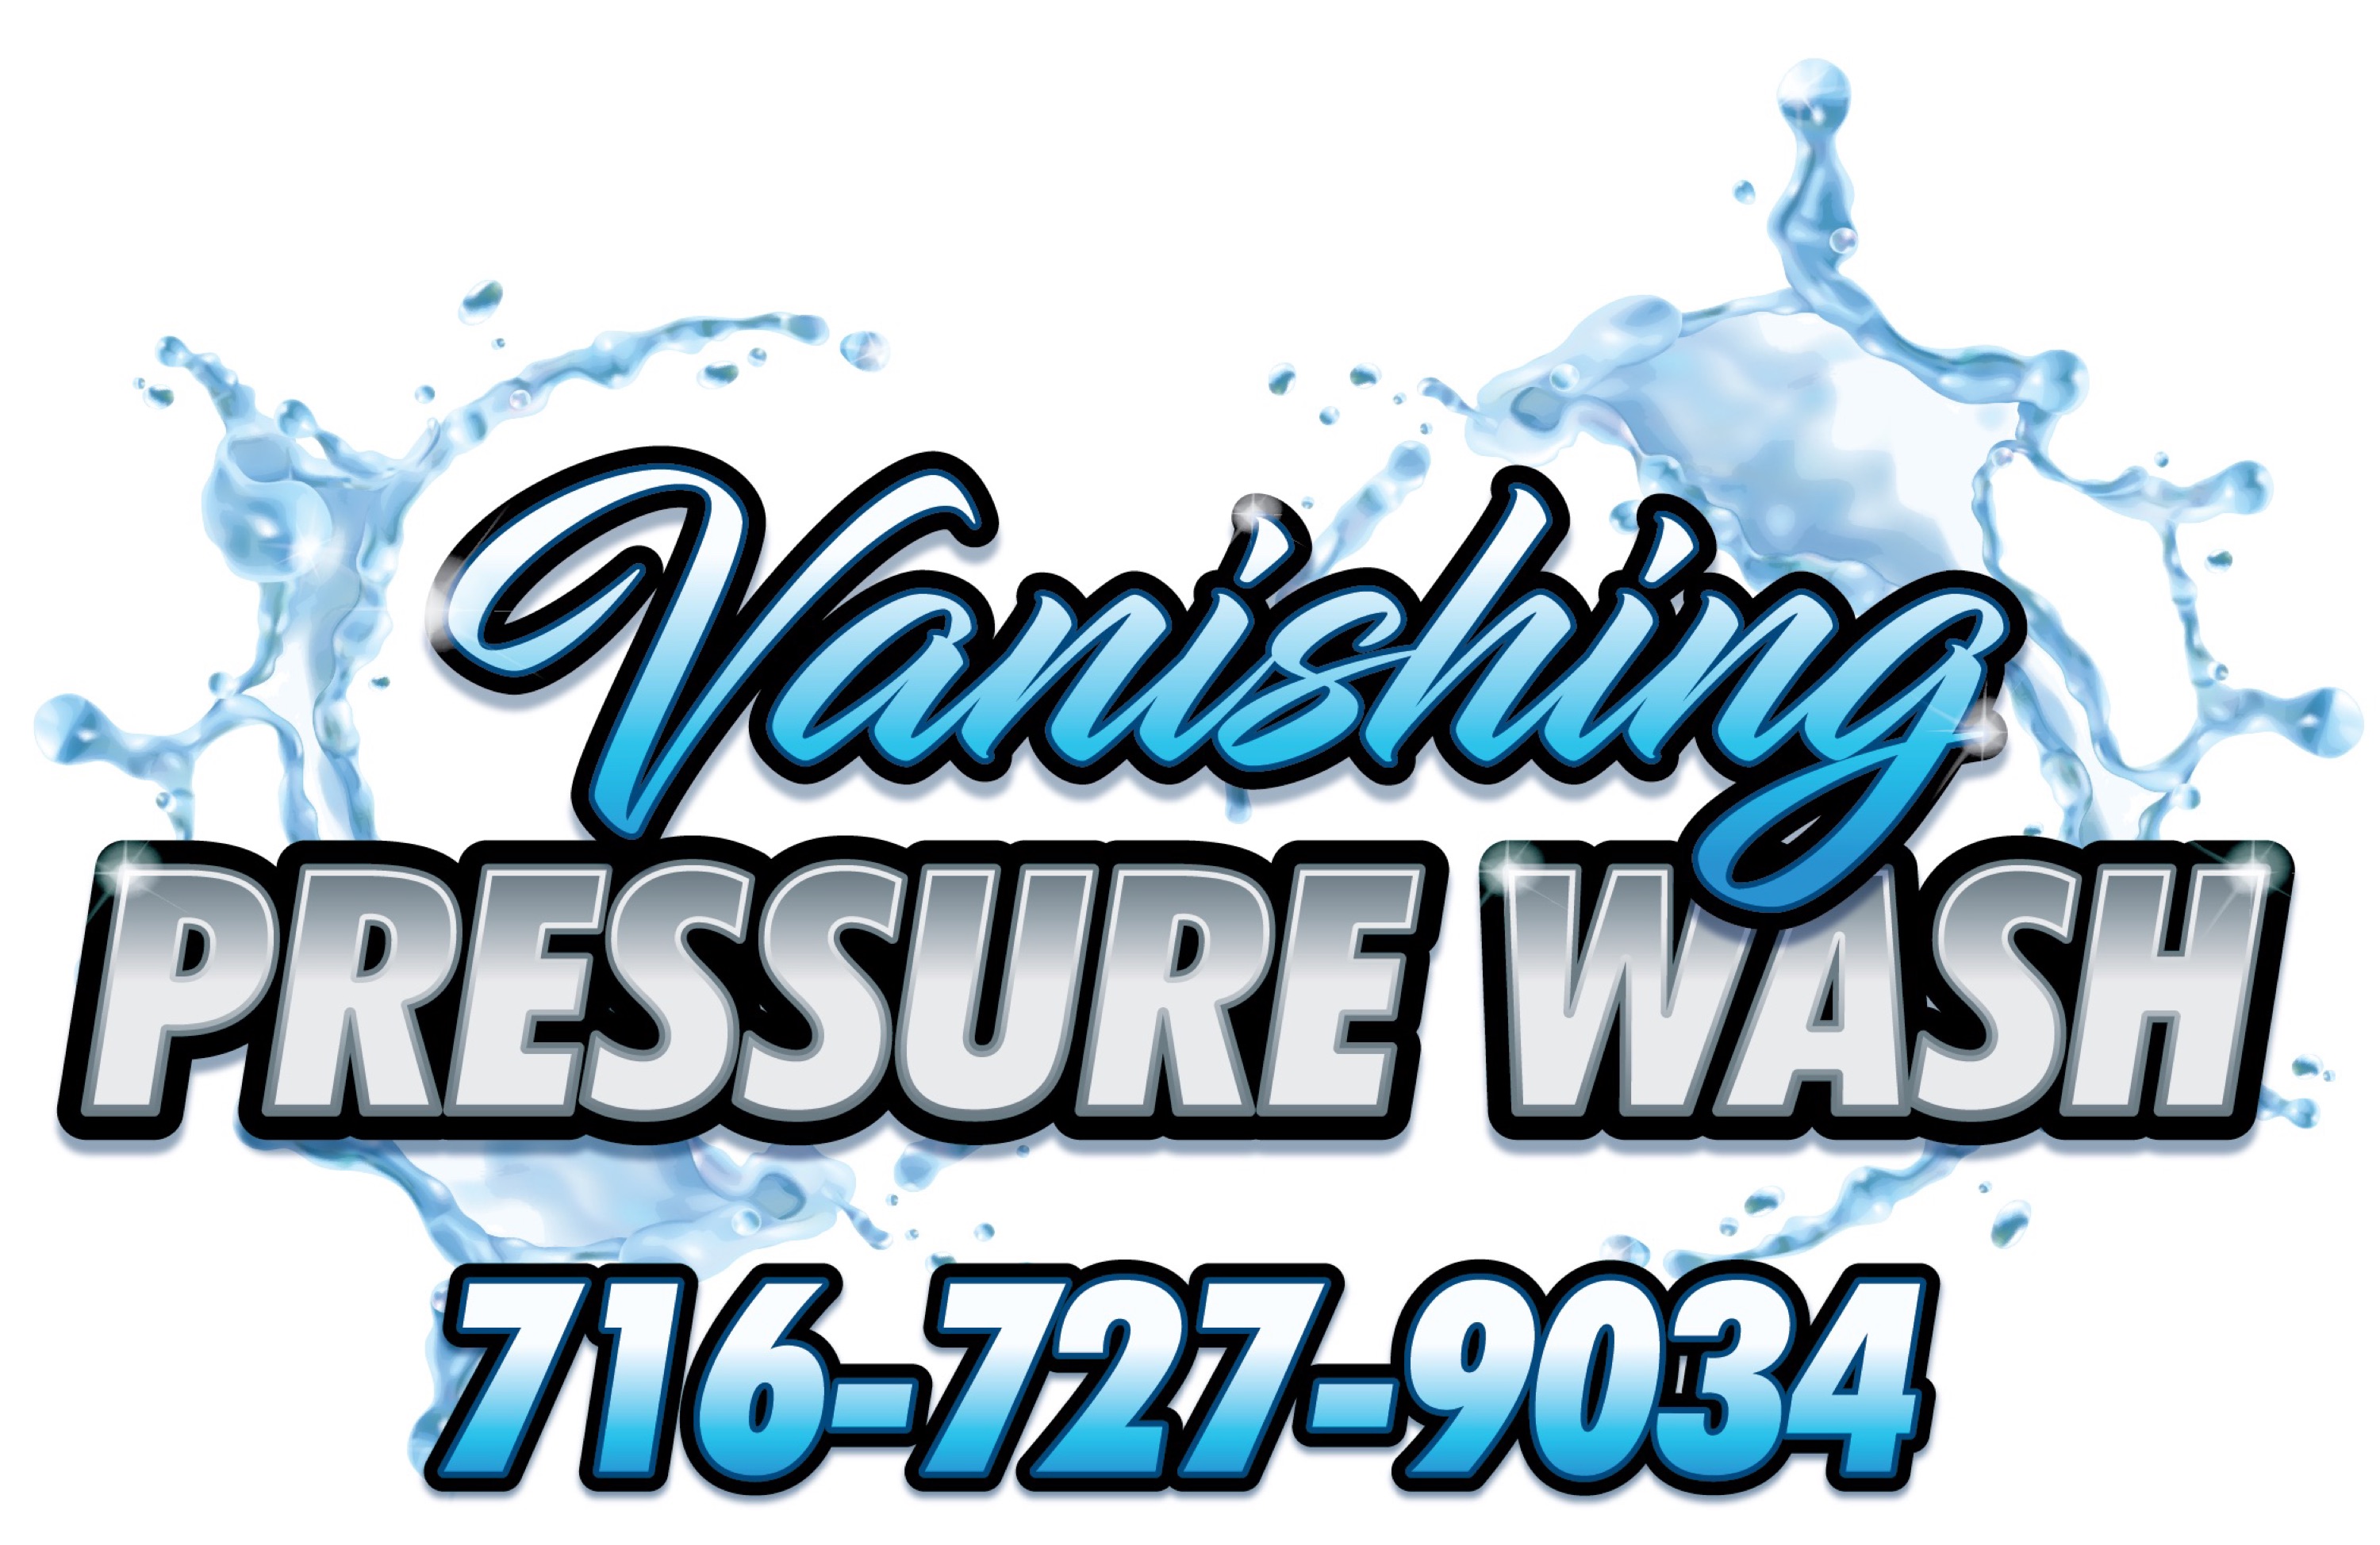 Vanishing Pressure Wash, LLC Logo